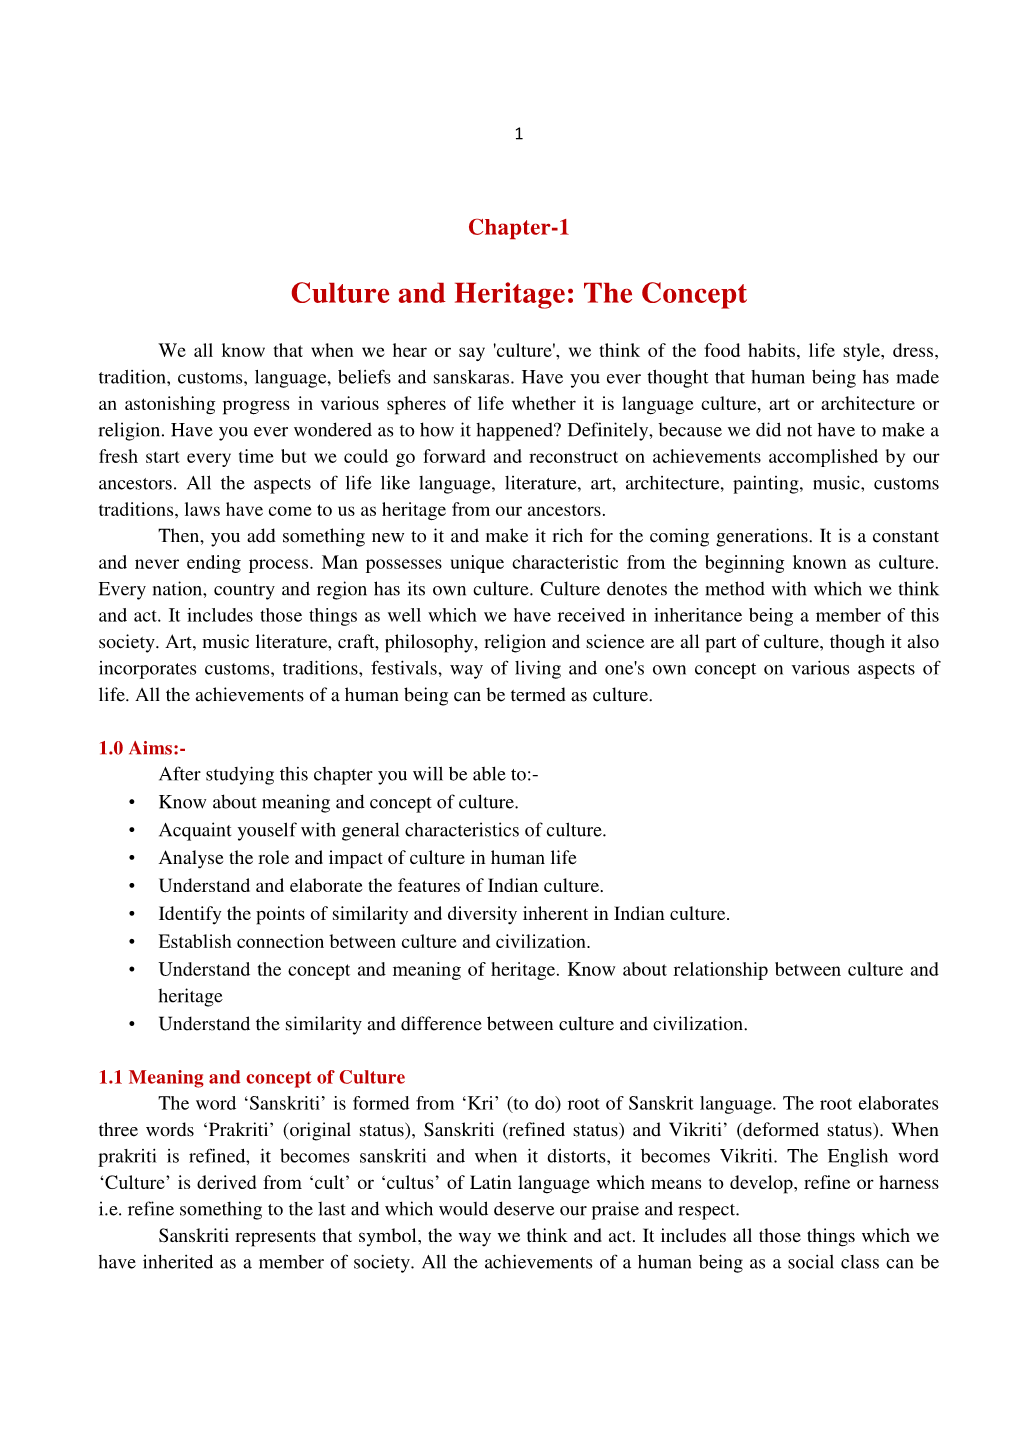 Indian Culture & Heritage